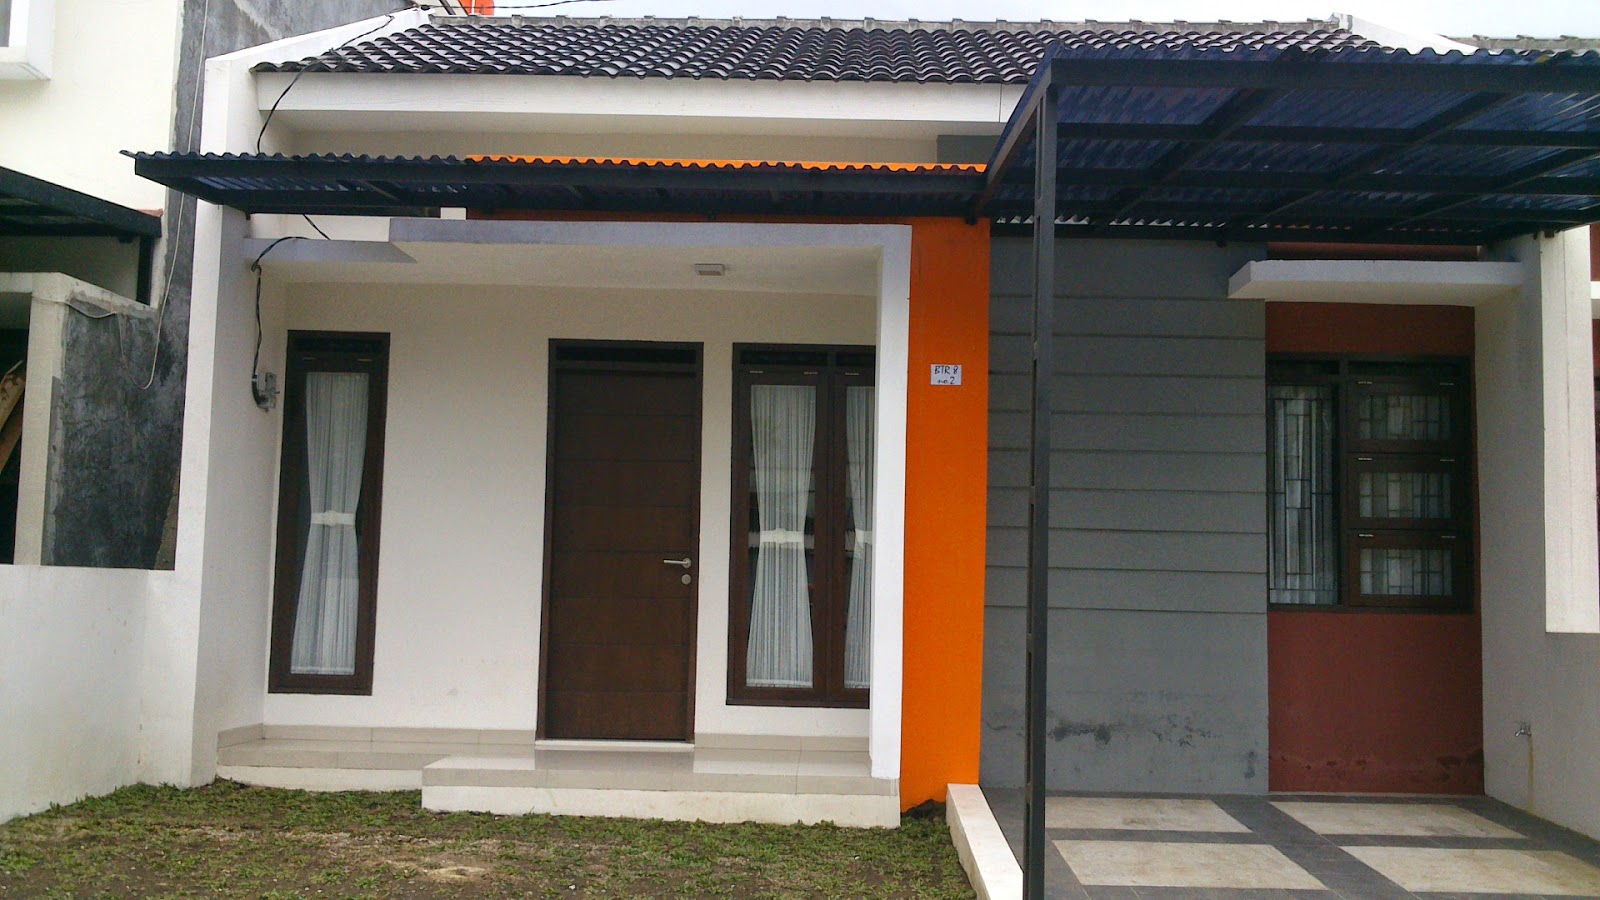  Rumah  Kontrakan Minimalis  Di  Jakarta  Barat Rumah  009